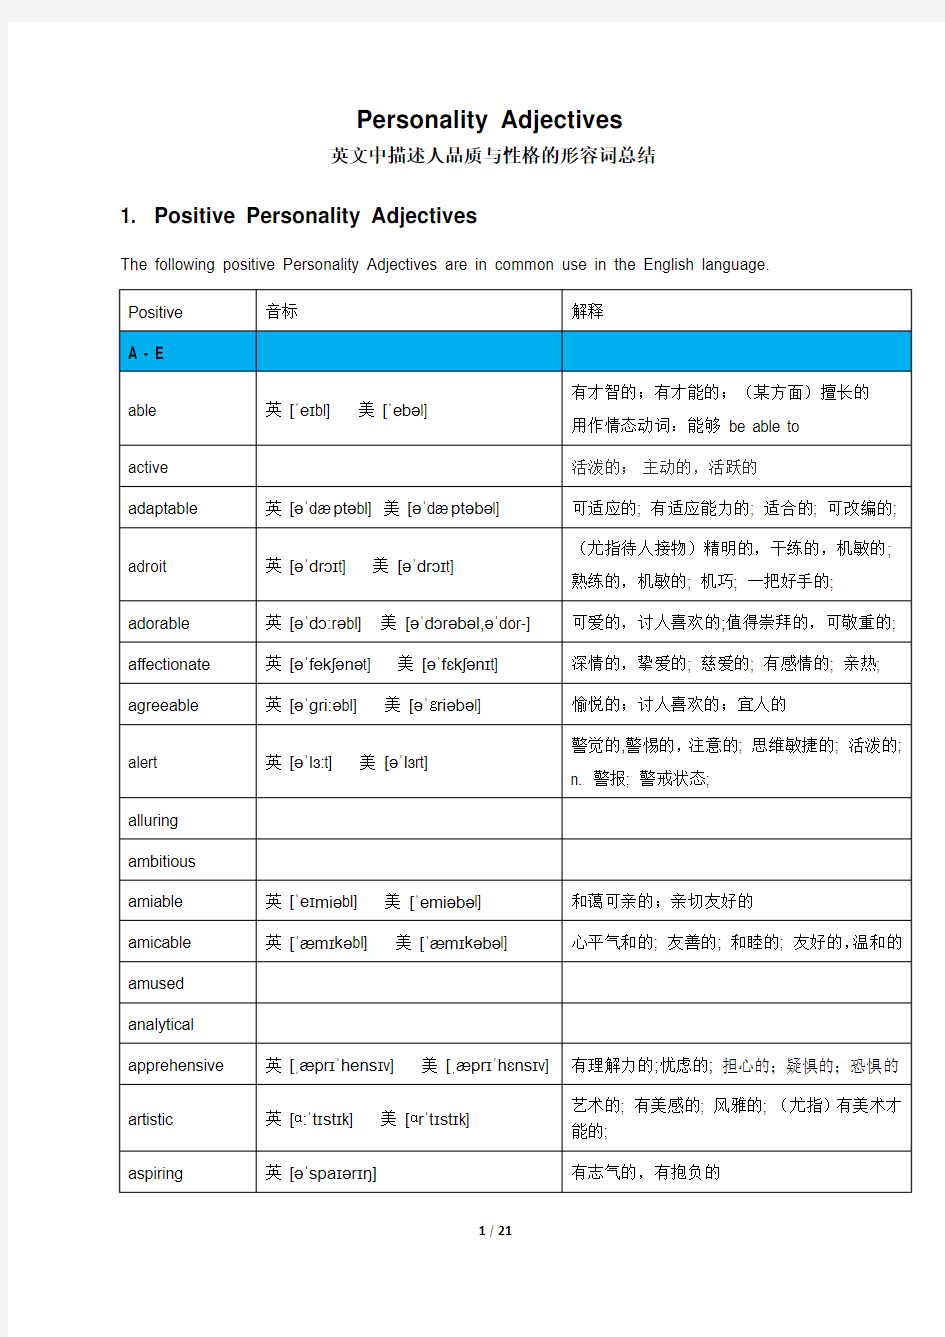 20181003-Personality Adjectives(英文中描述人品质与性格的形容词总结)-Vision